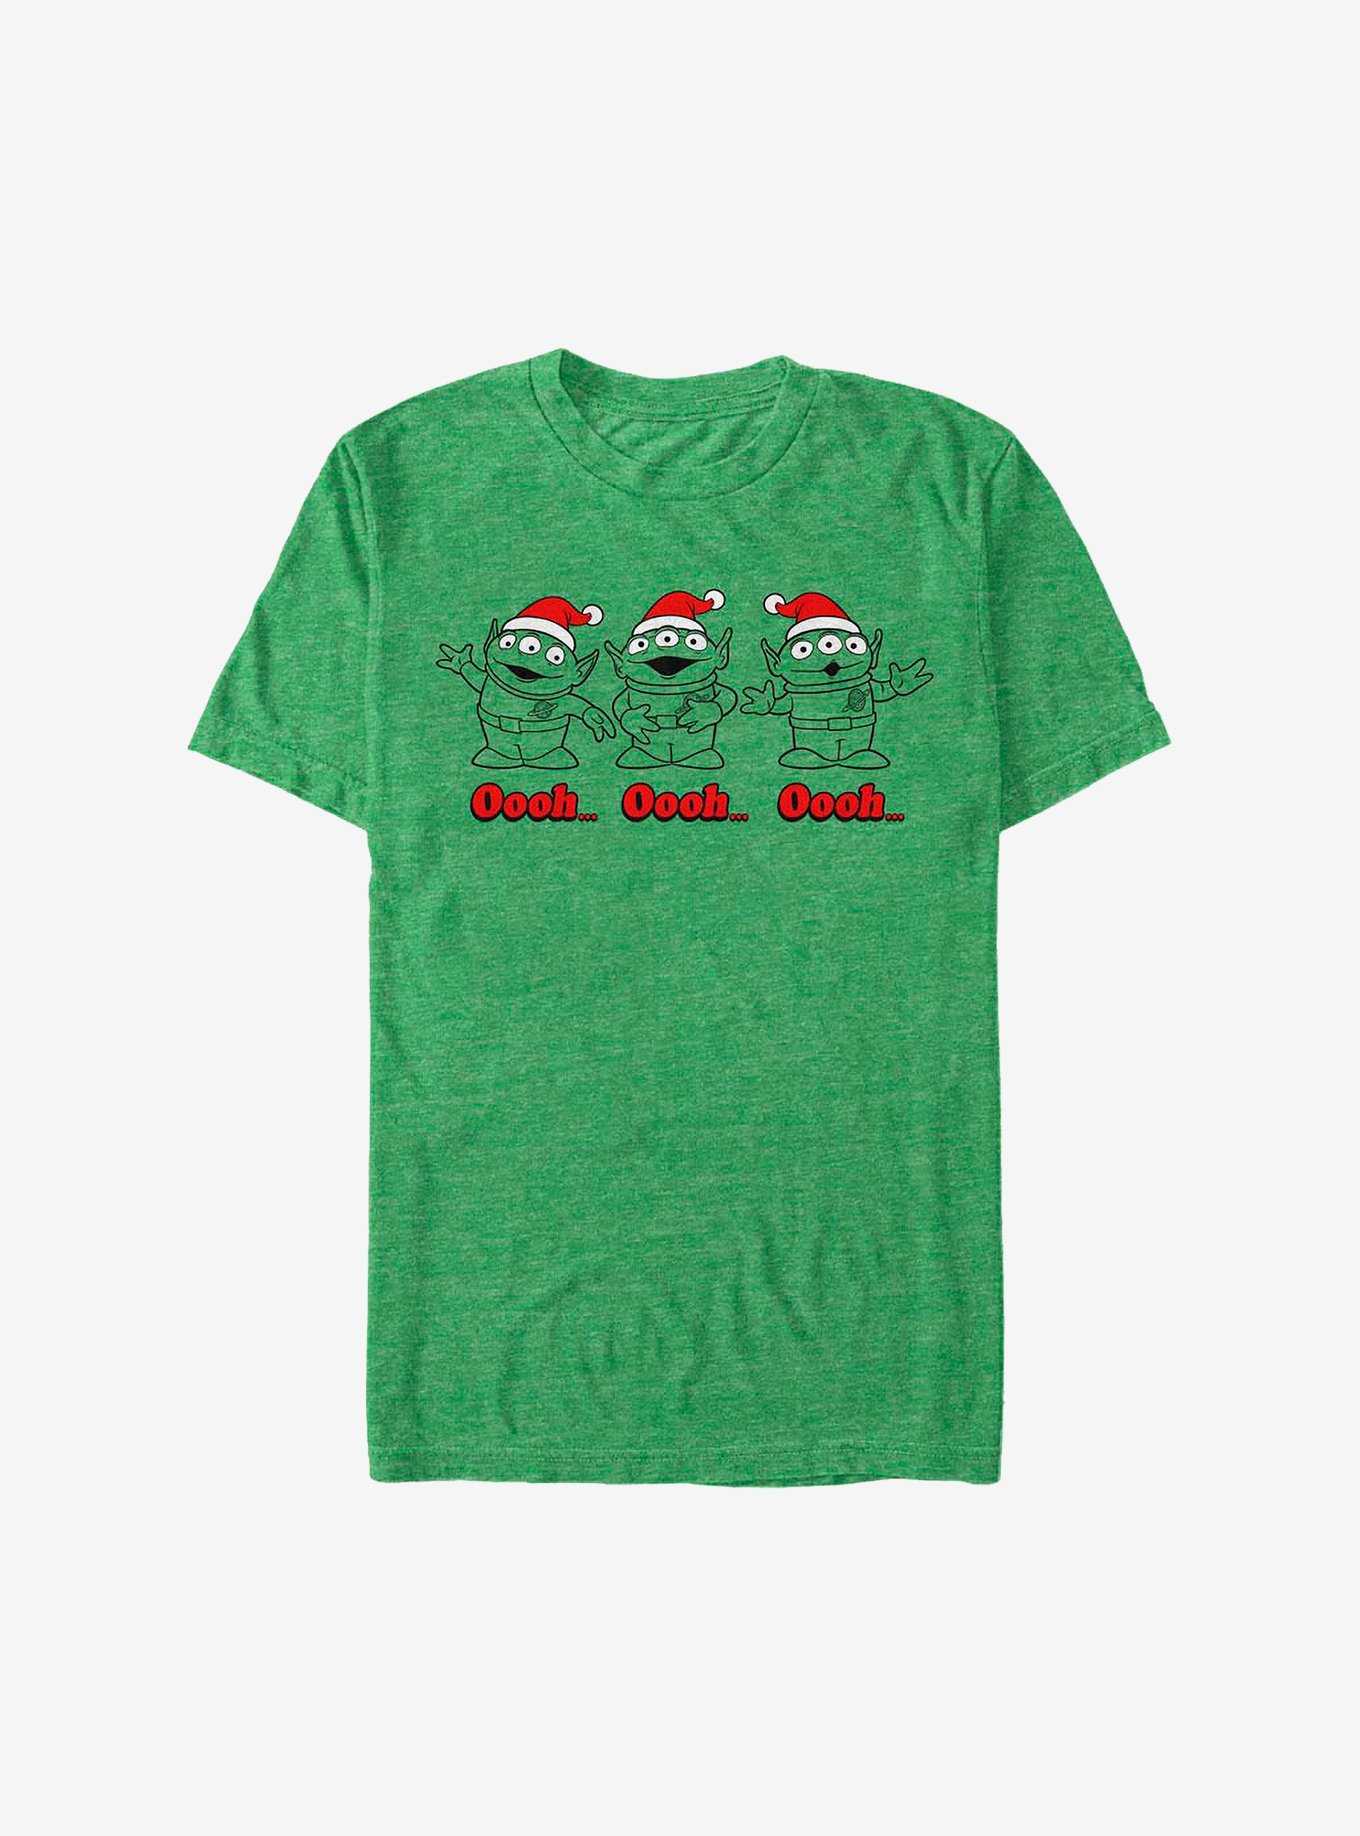 Disney Pixar Toy Story Ooh Ooh Ooh Aliens Holiday T-Shirt, , hi-res